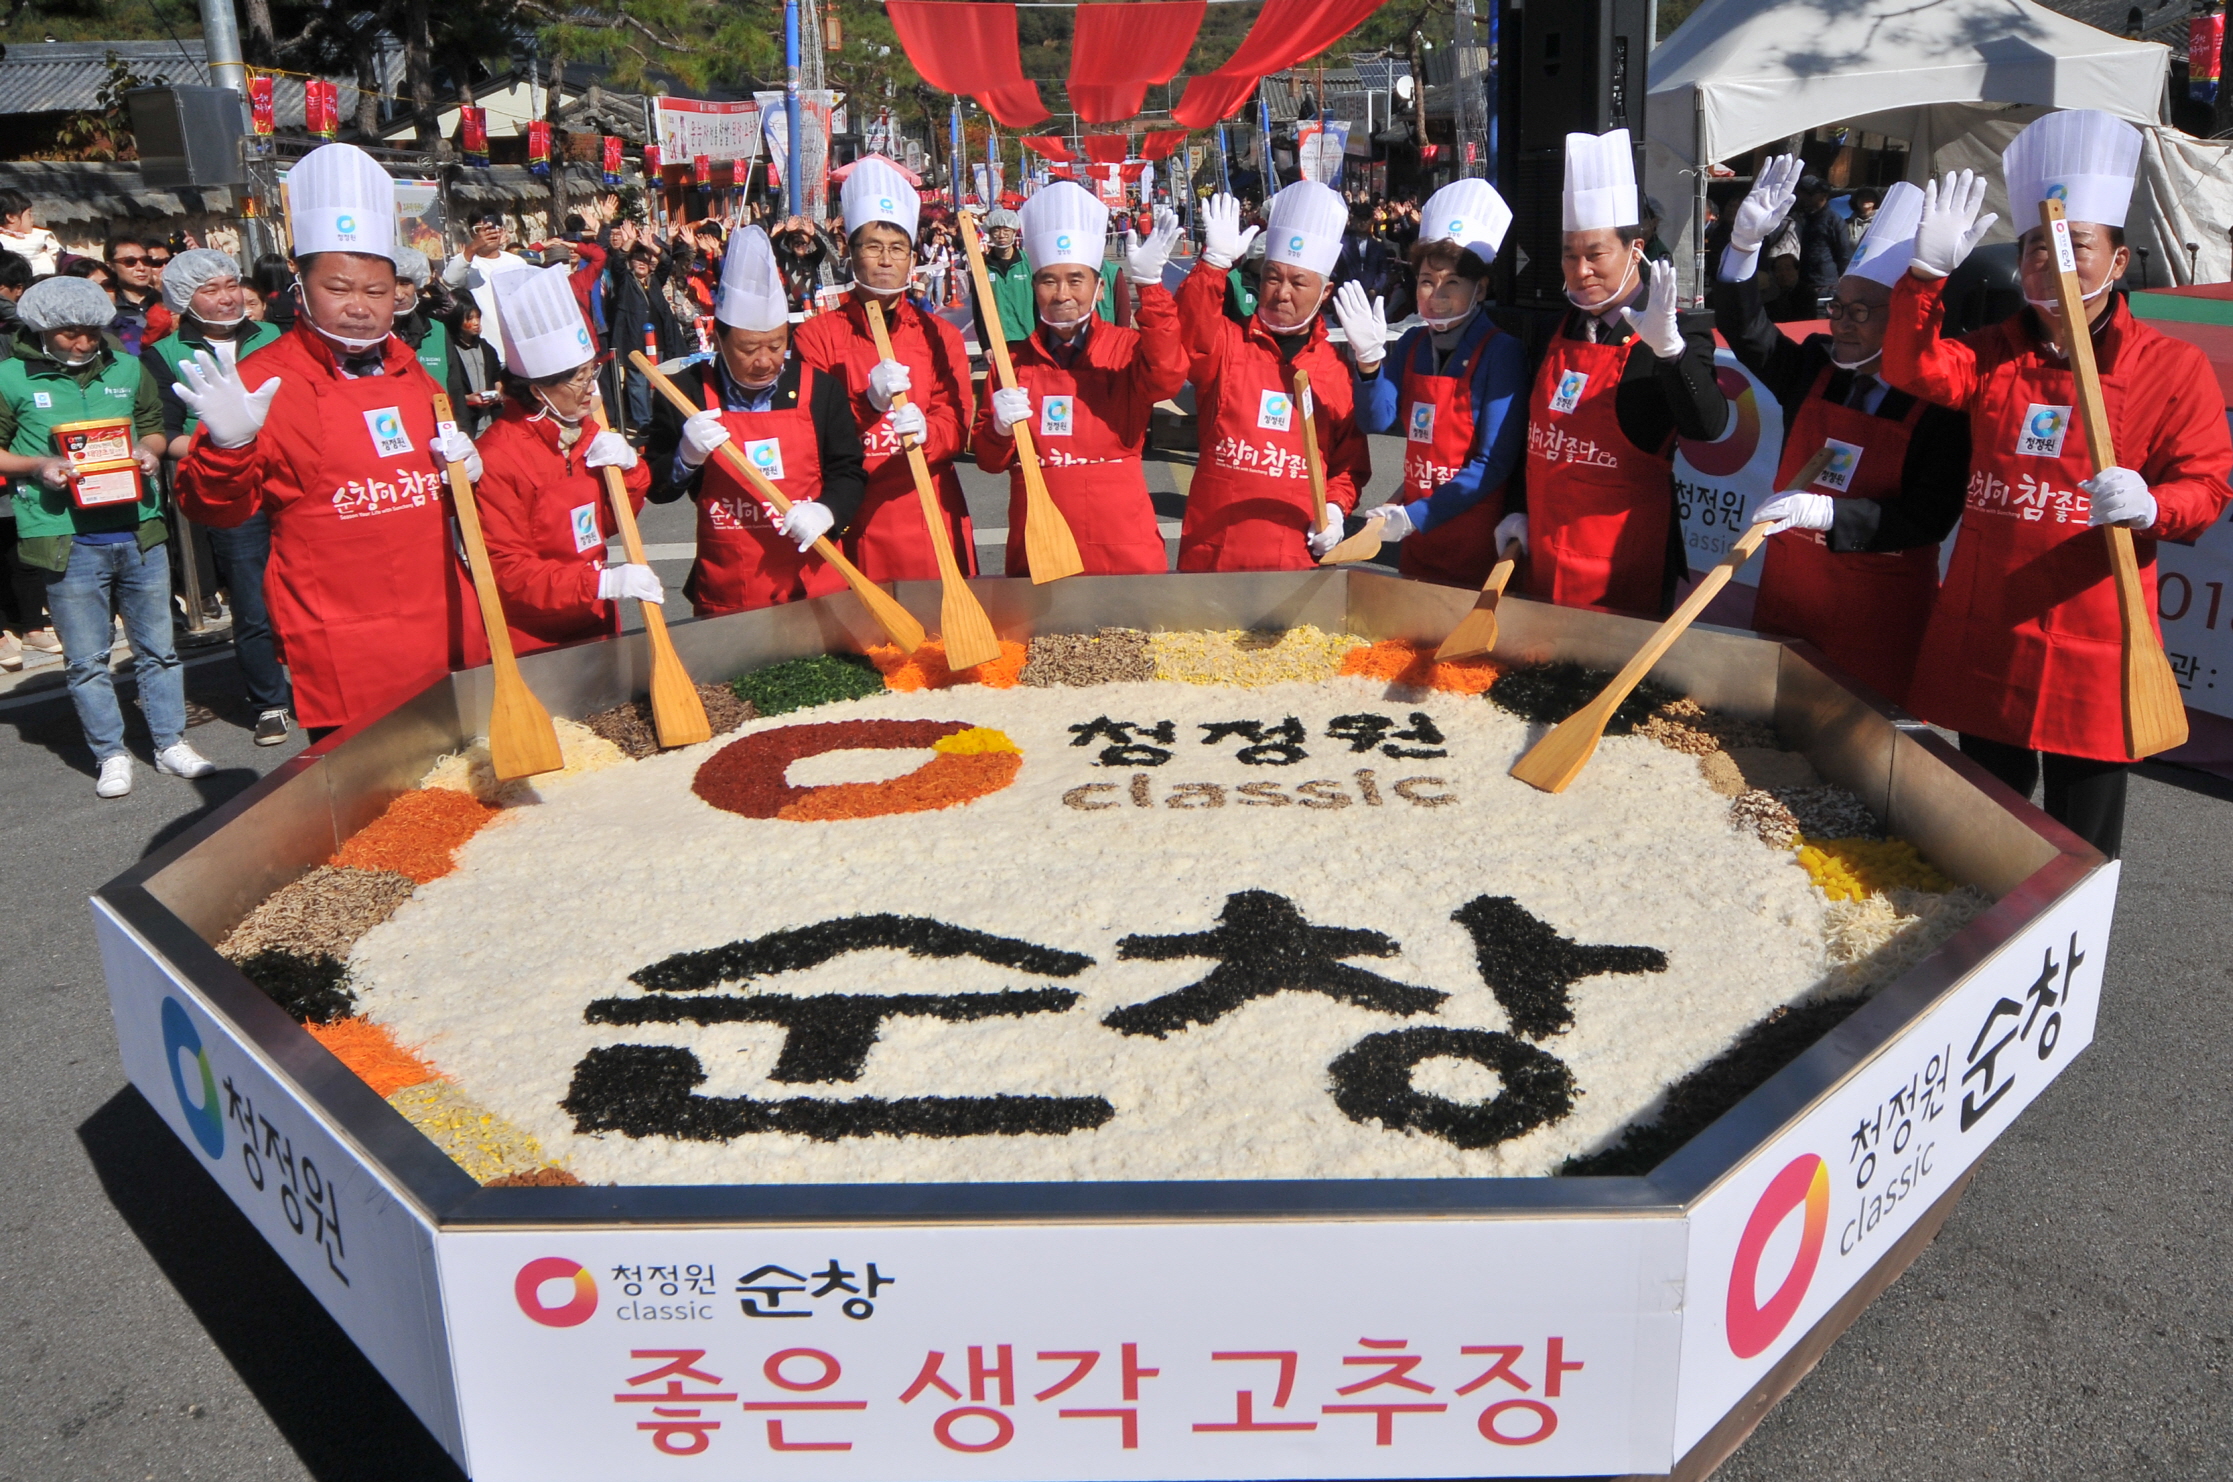 Korea’s “Hottest” Sauce Event: The Sunchang Fermented Food Festival